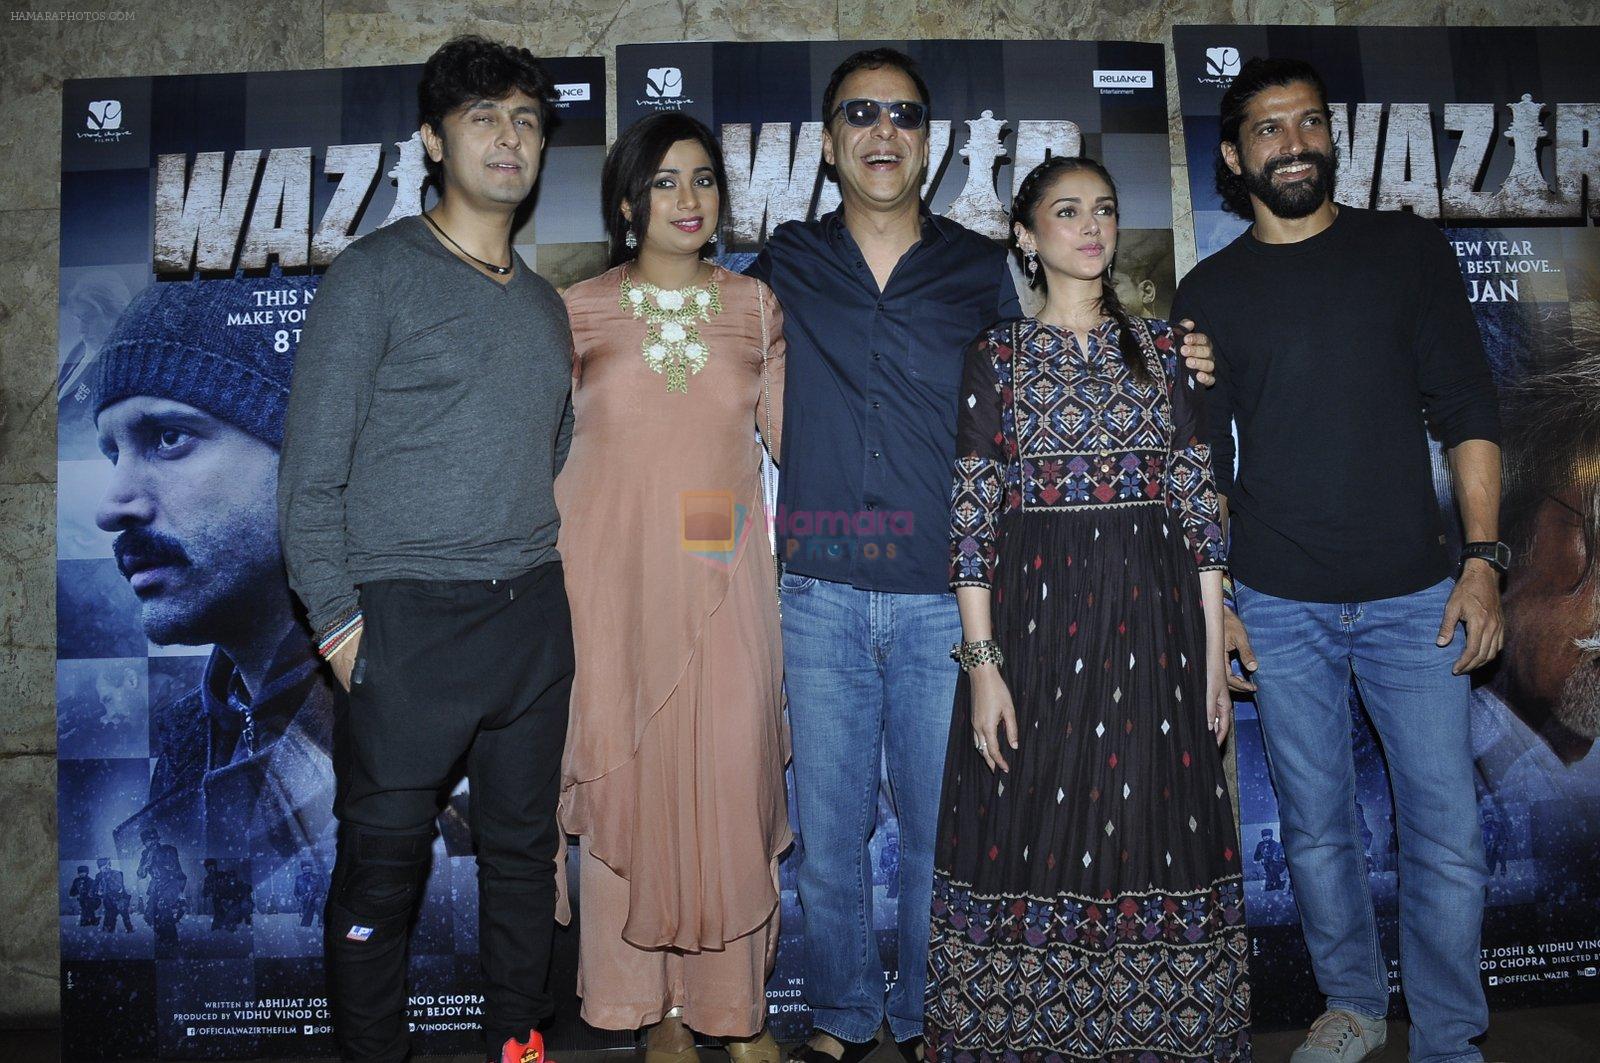 Aditi Rao Hydari, Farhan Akhtar, Shreya Ghoshal, Sonu Nigam, Vidhu Vinod Chopra at Wazir film promotions on 4th Dec 2015